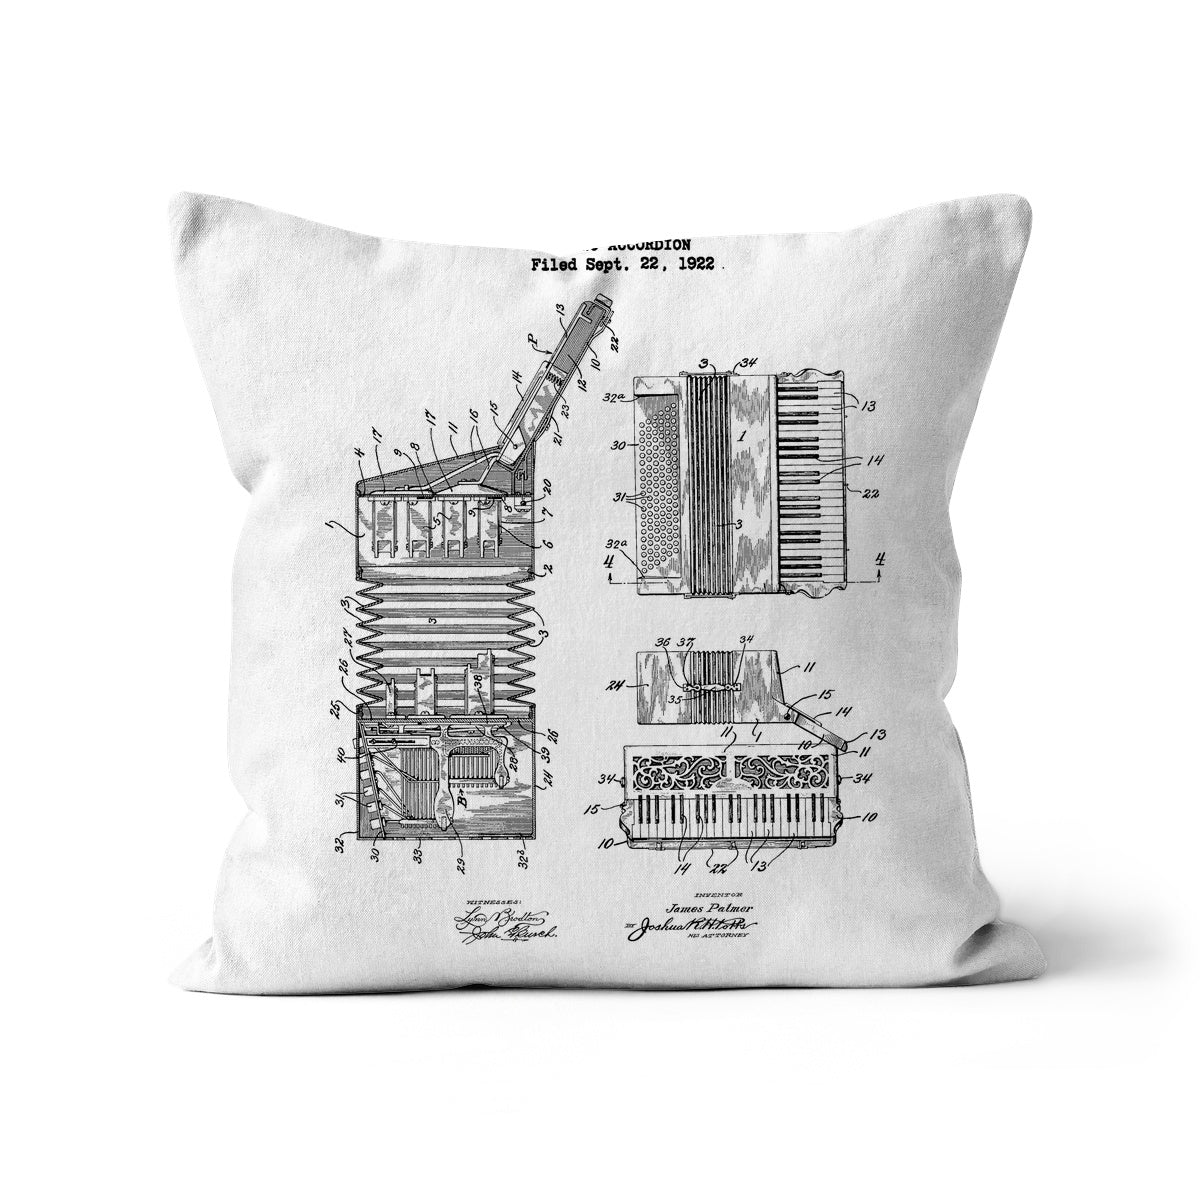 Accordion Patent Cushion